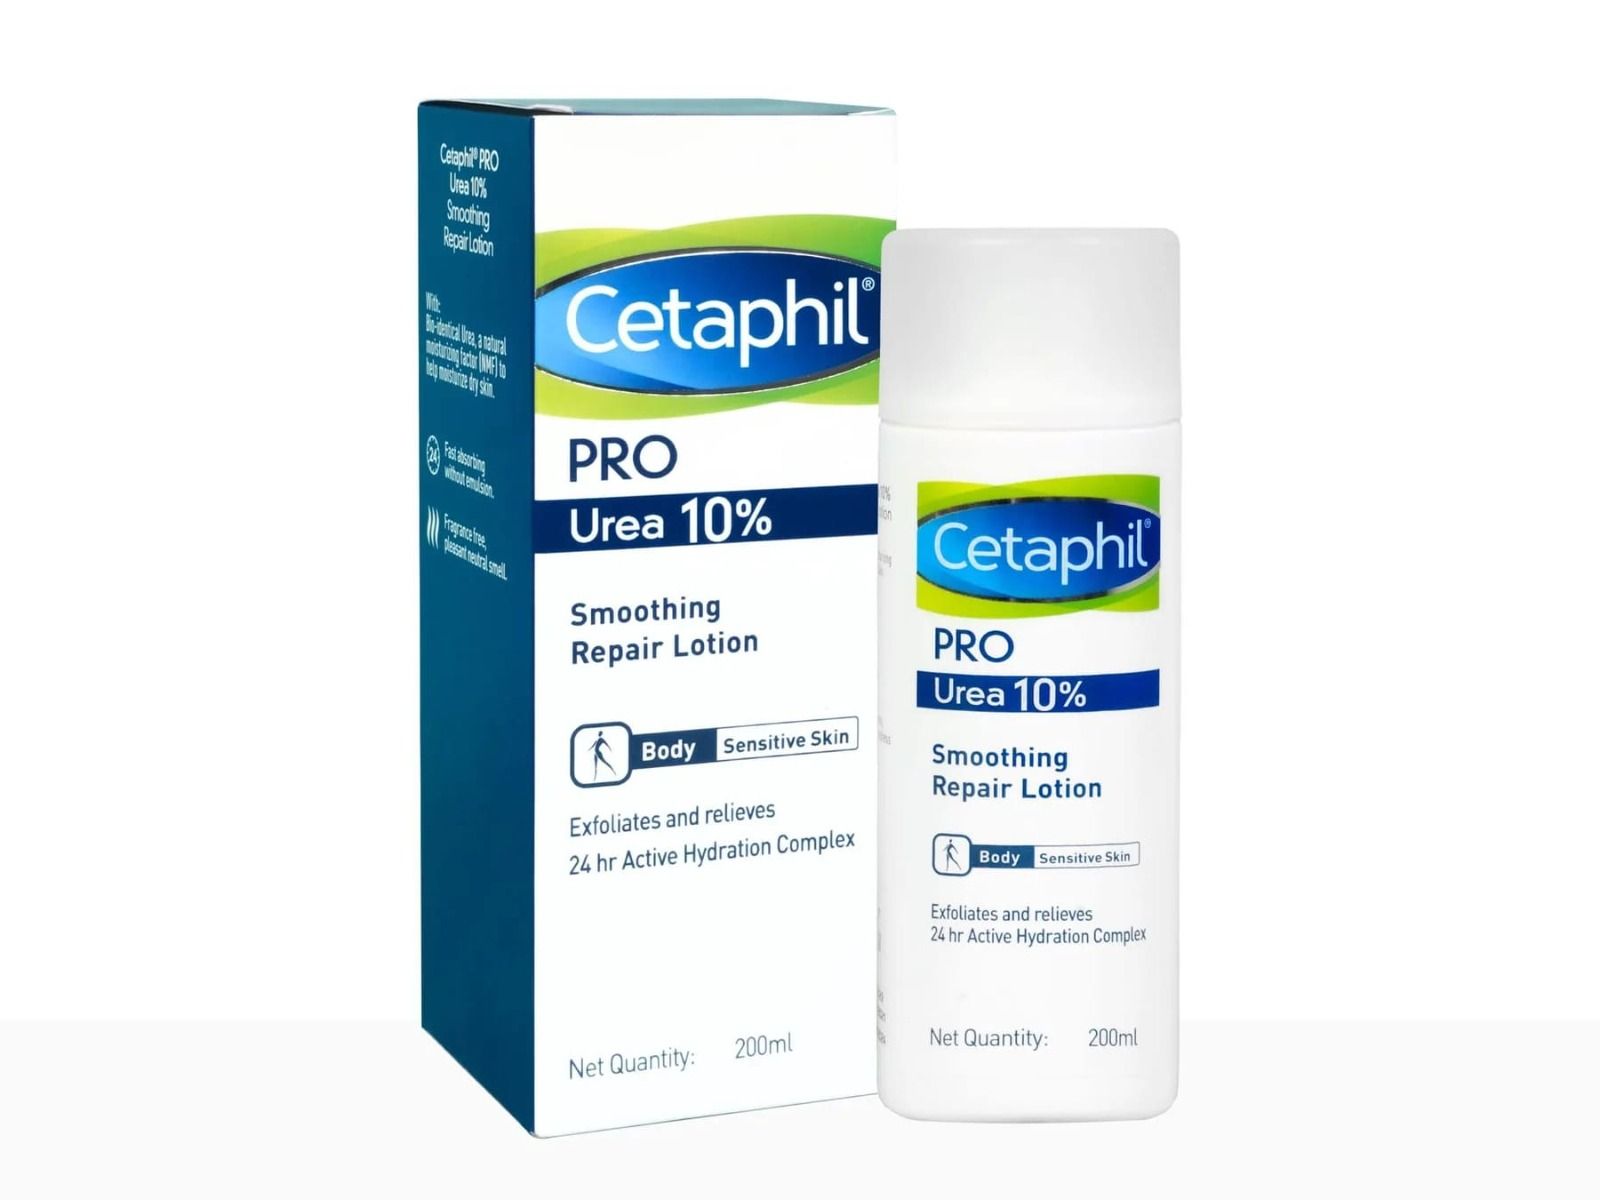 Cetaphil Pro Urea 10% Smoothing Repair Lotion, 200 ml, Pack of 1 